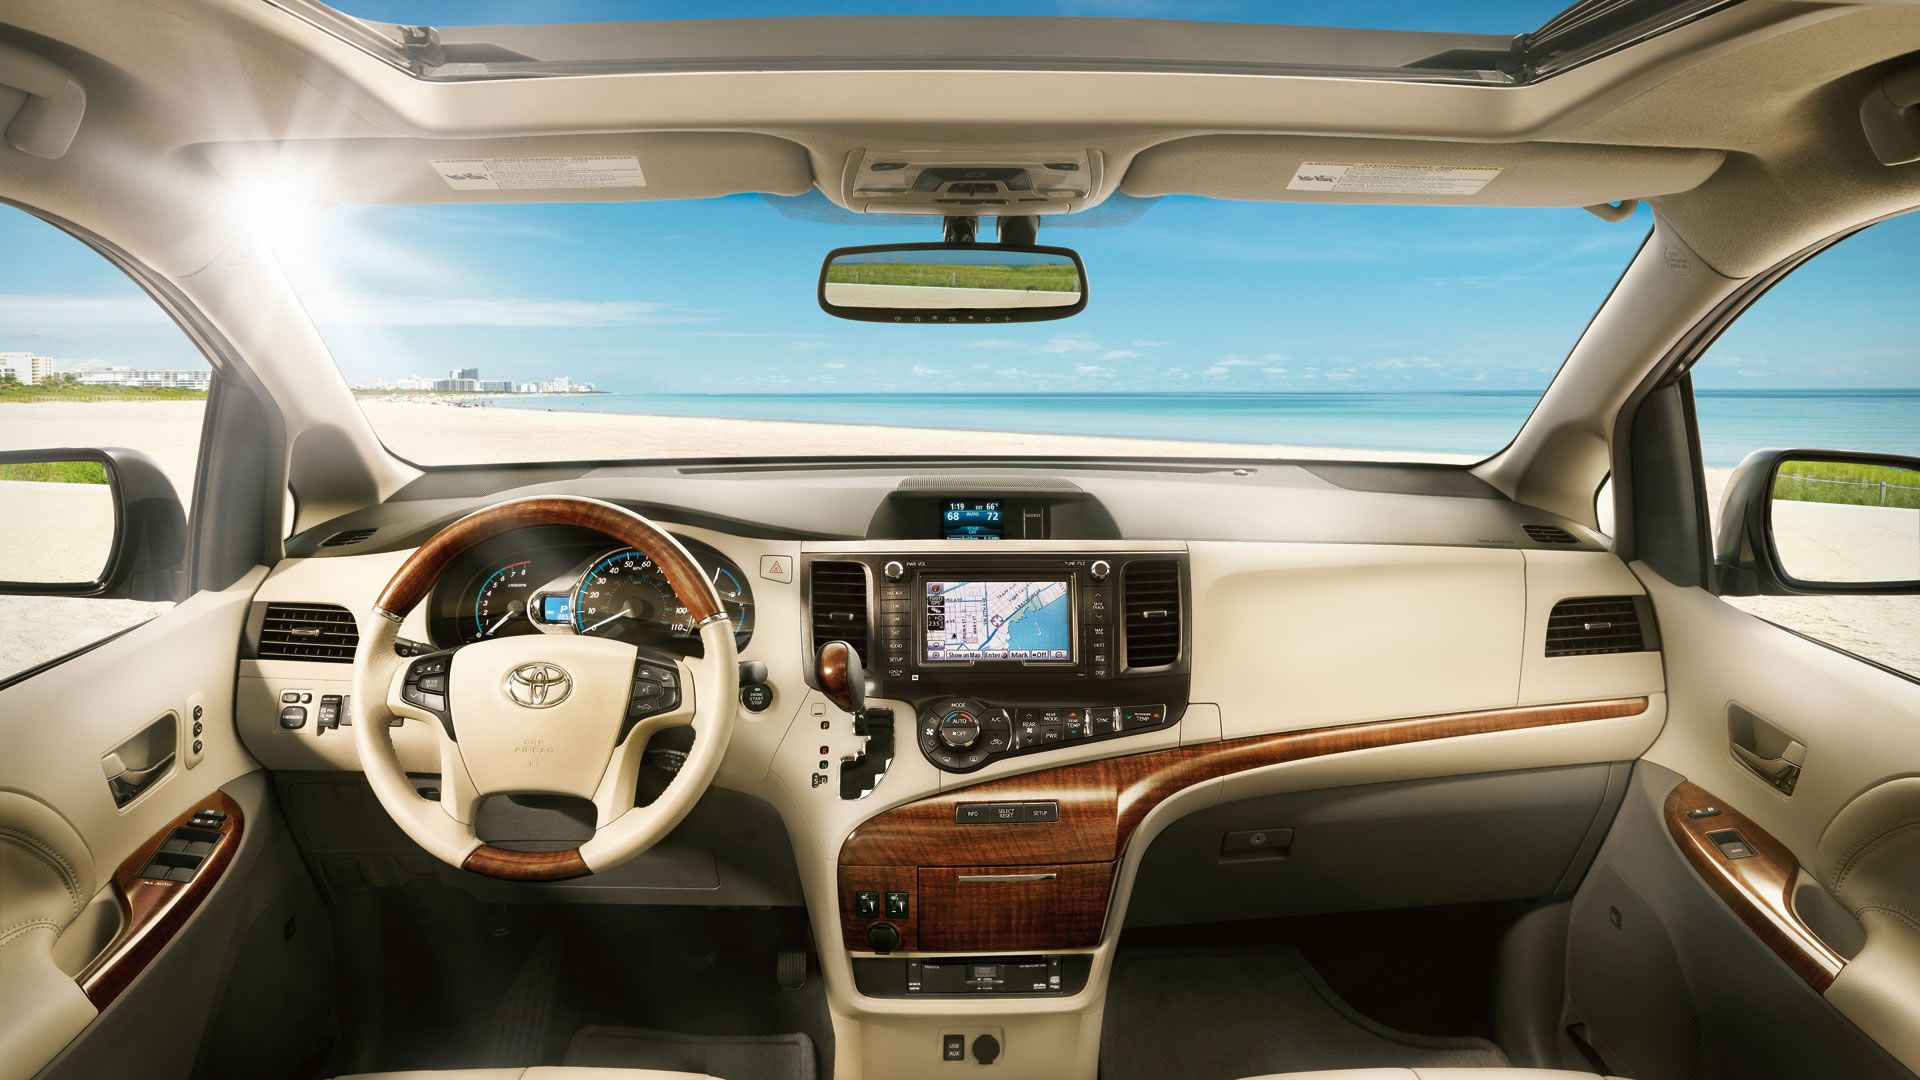 Elegant interior design. | Toyota sienna interior, Toyota sienna, Toyota